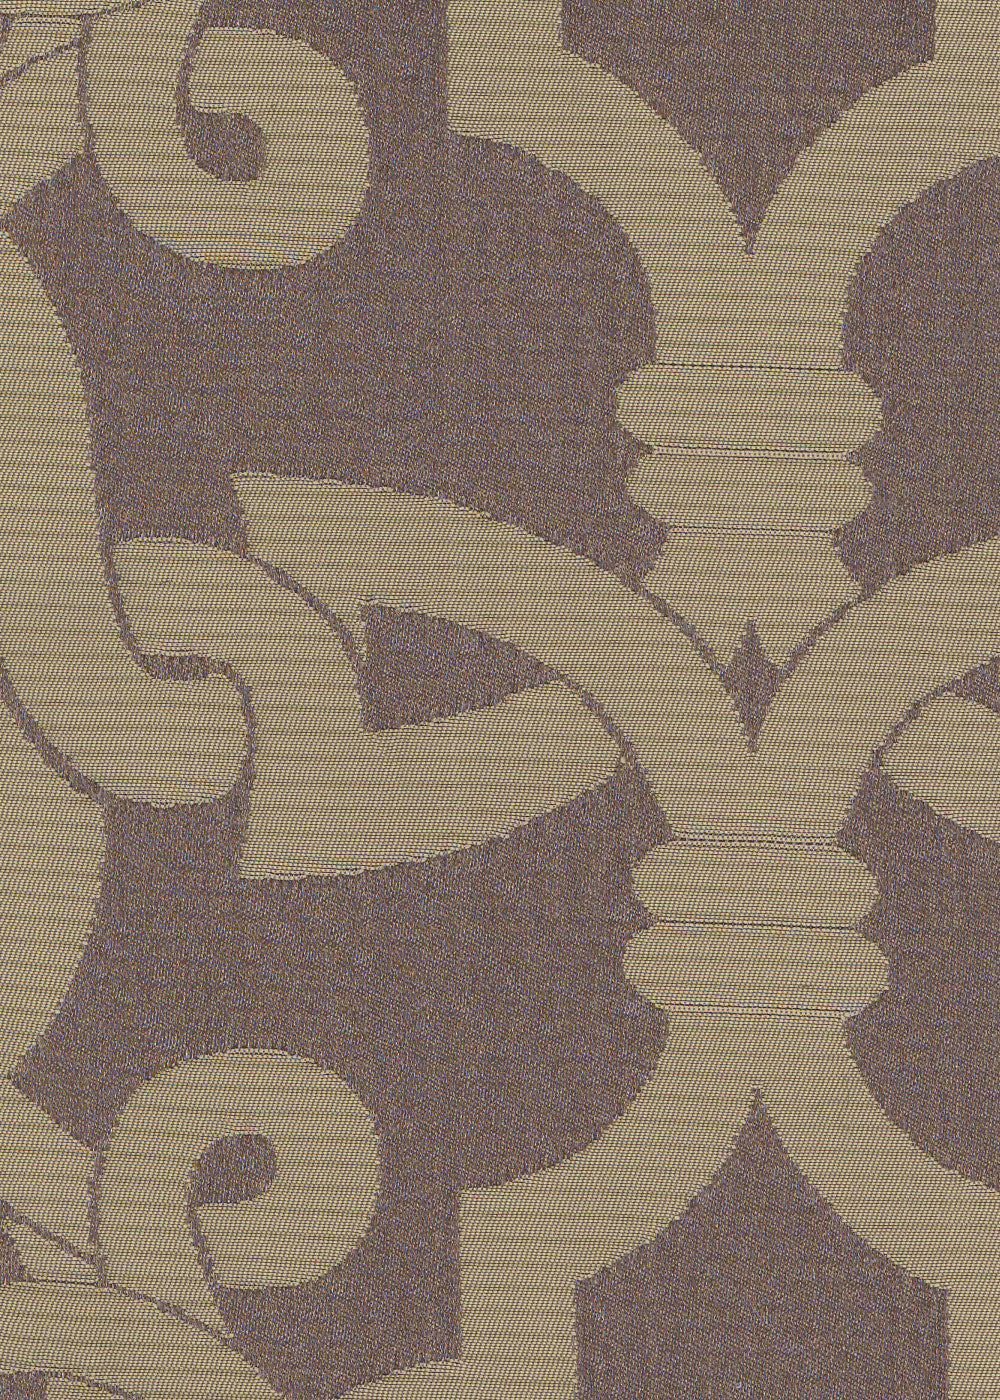 close up of eggplant fabric with a geometric lattice pattern